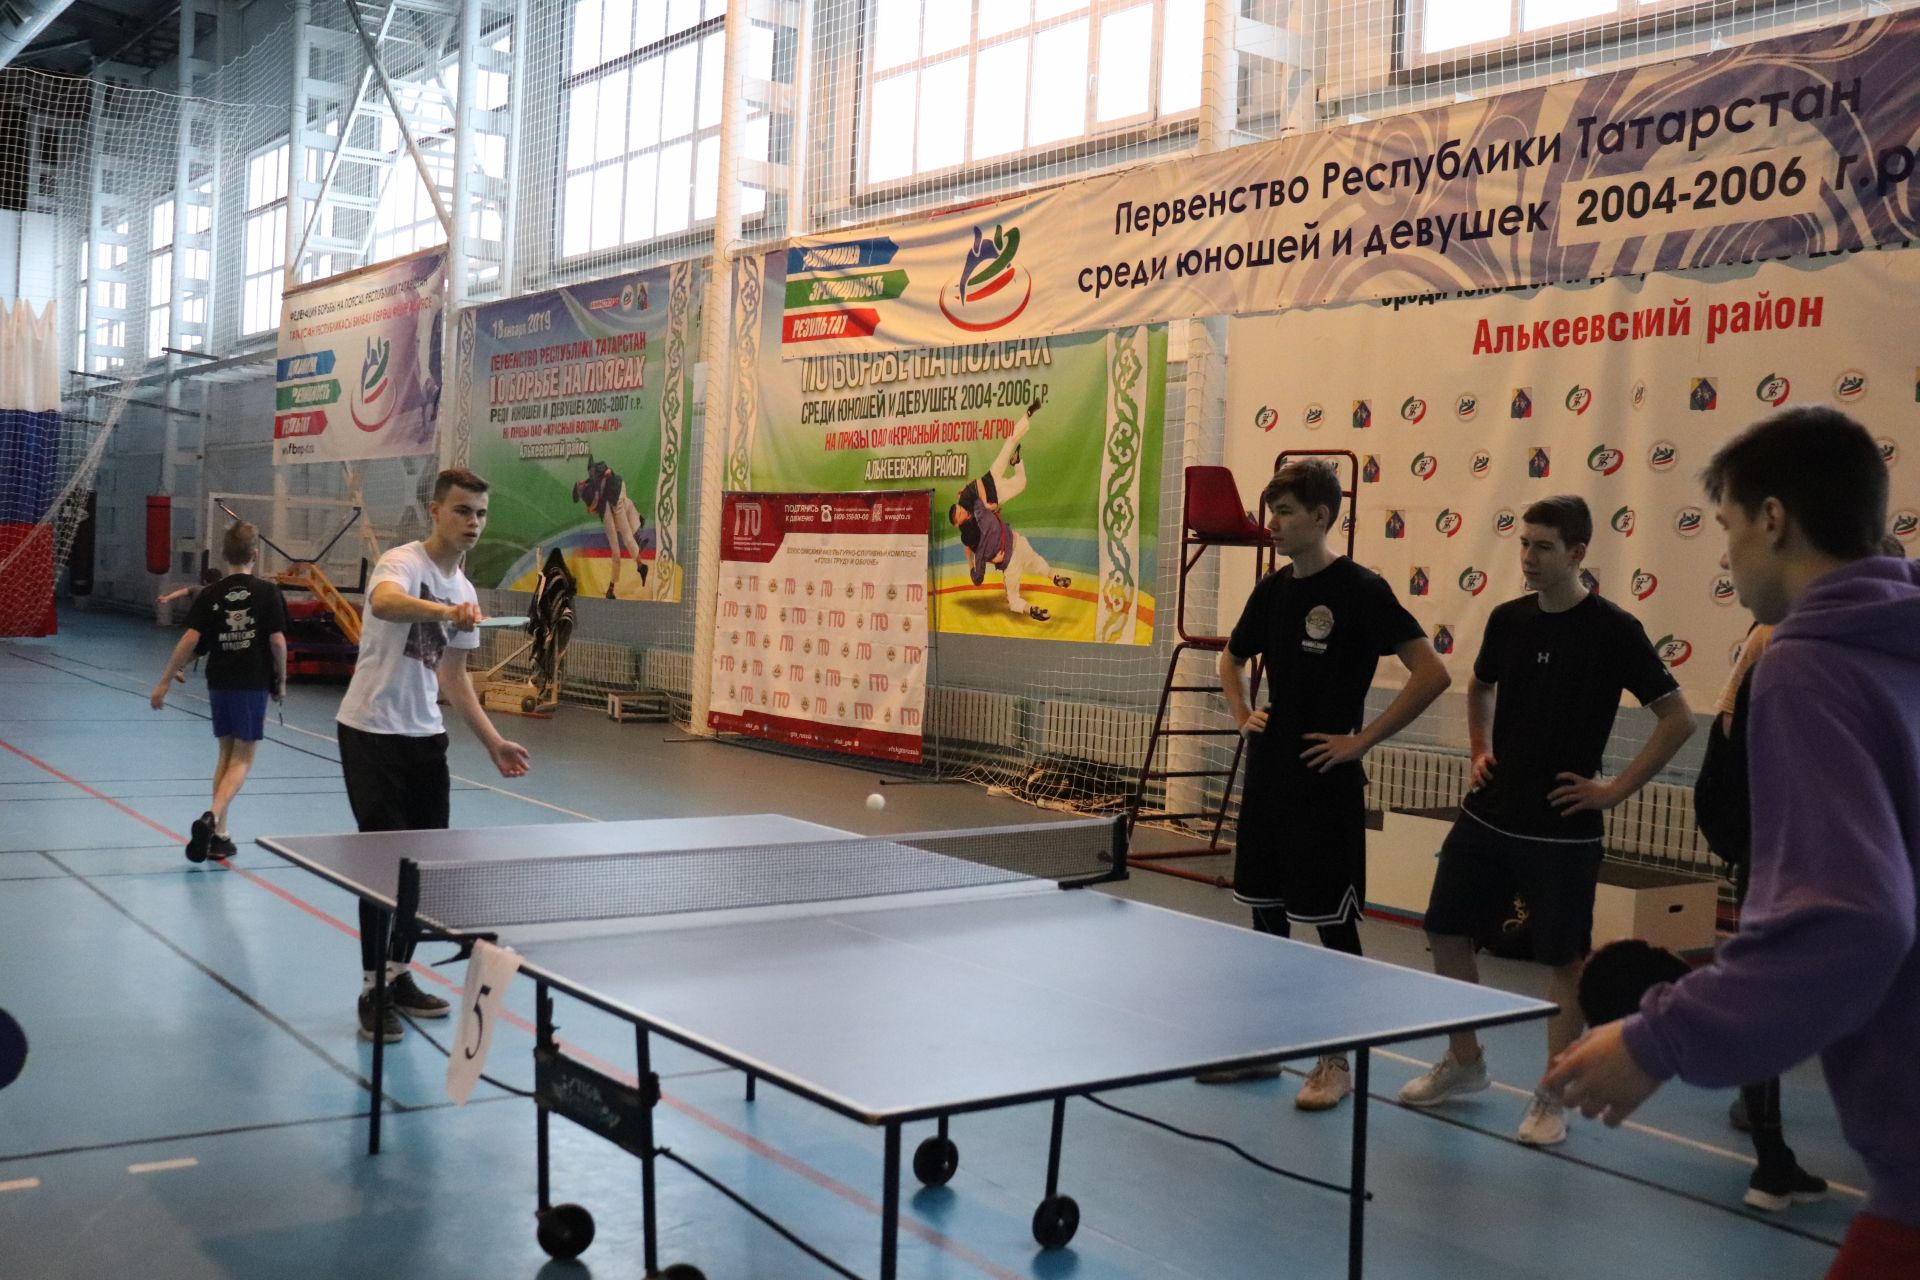 Әнвәр Галимов истәлегенә өстәл теннисы буенча турнир